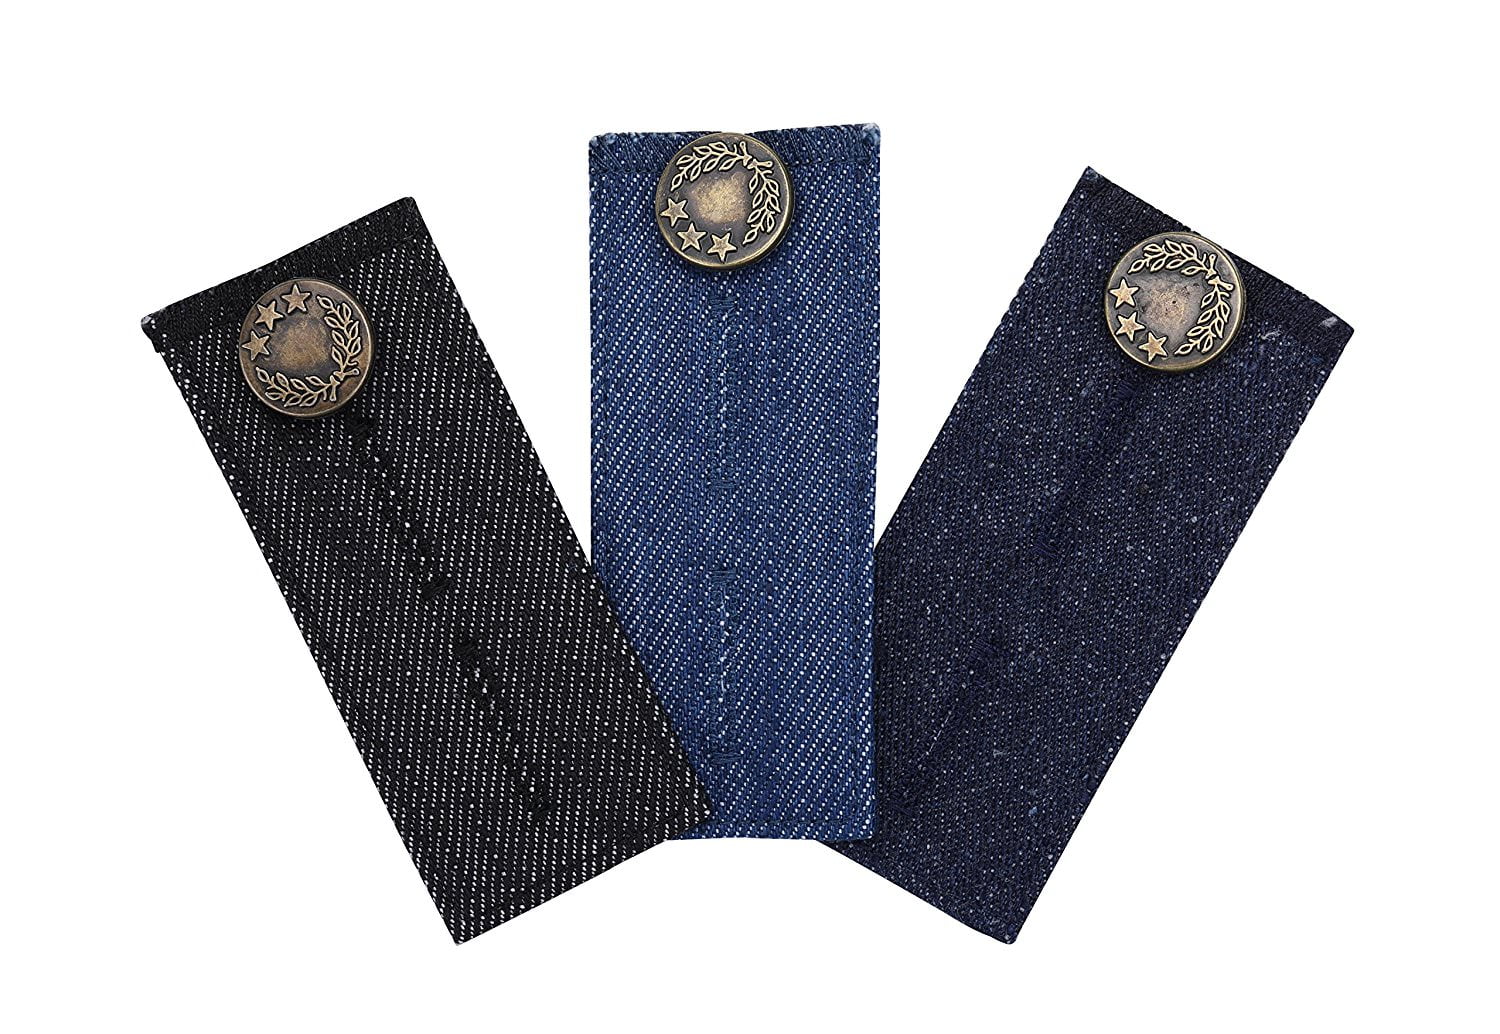 4/8 PCS Denim Waist Extender Button Metal for Jeans Pants Skirt Comfy Expander 